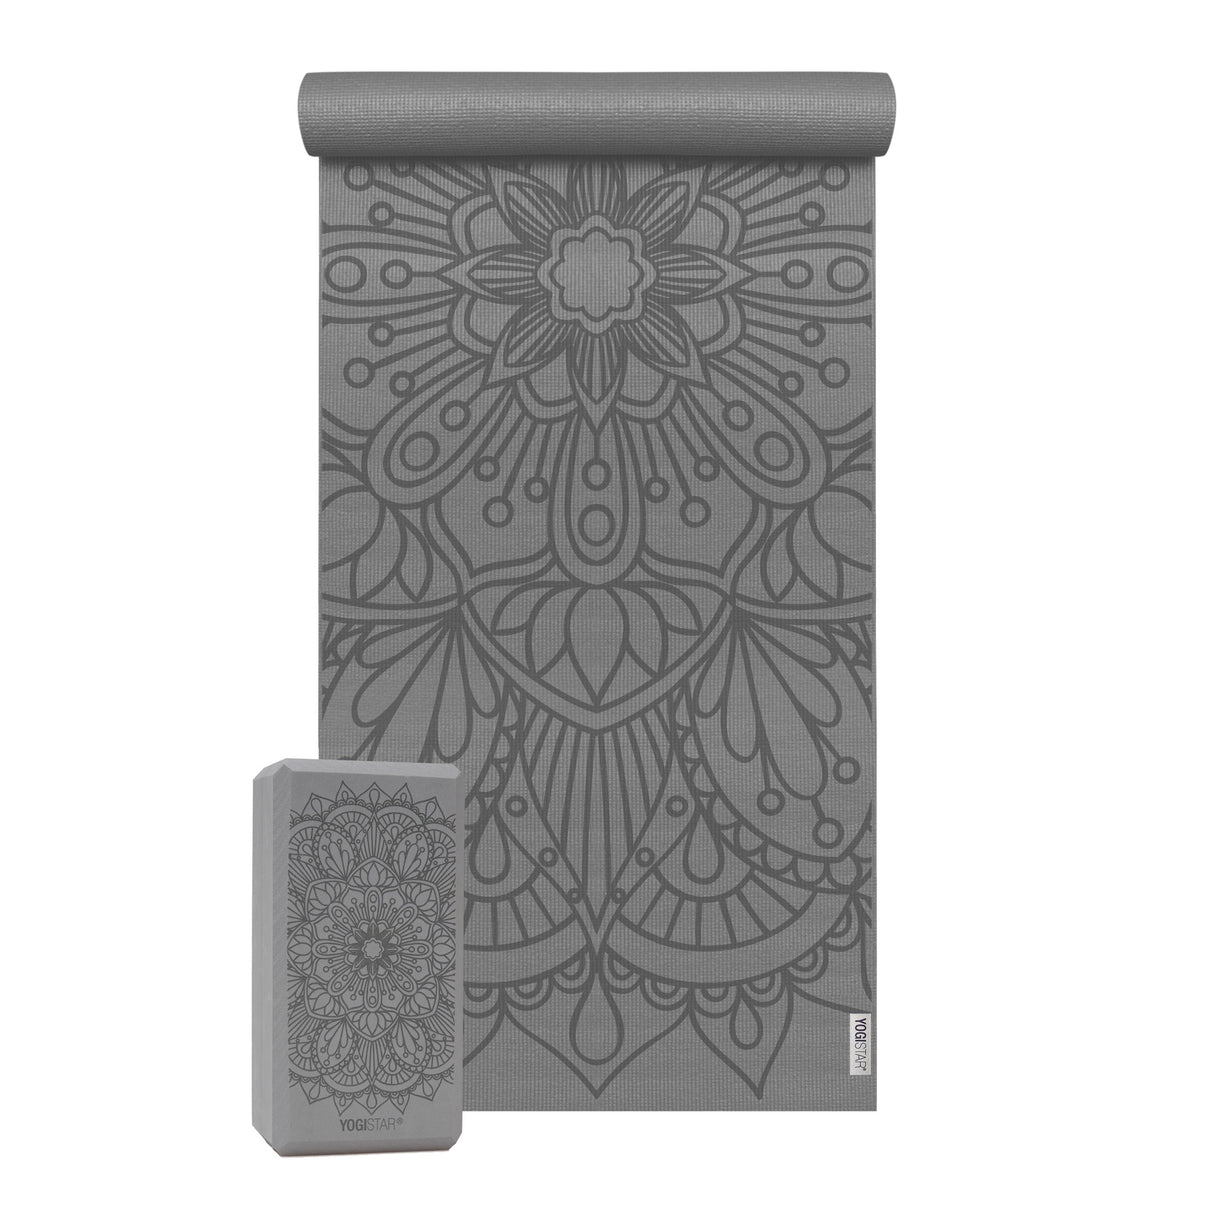 Yoga-Set Starter Edition - lotus mandala (Yogamatte + 1 Yogablock) - graphit